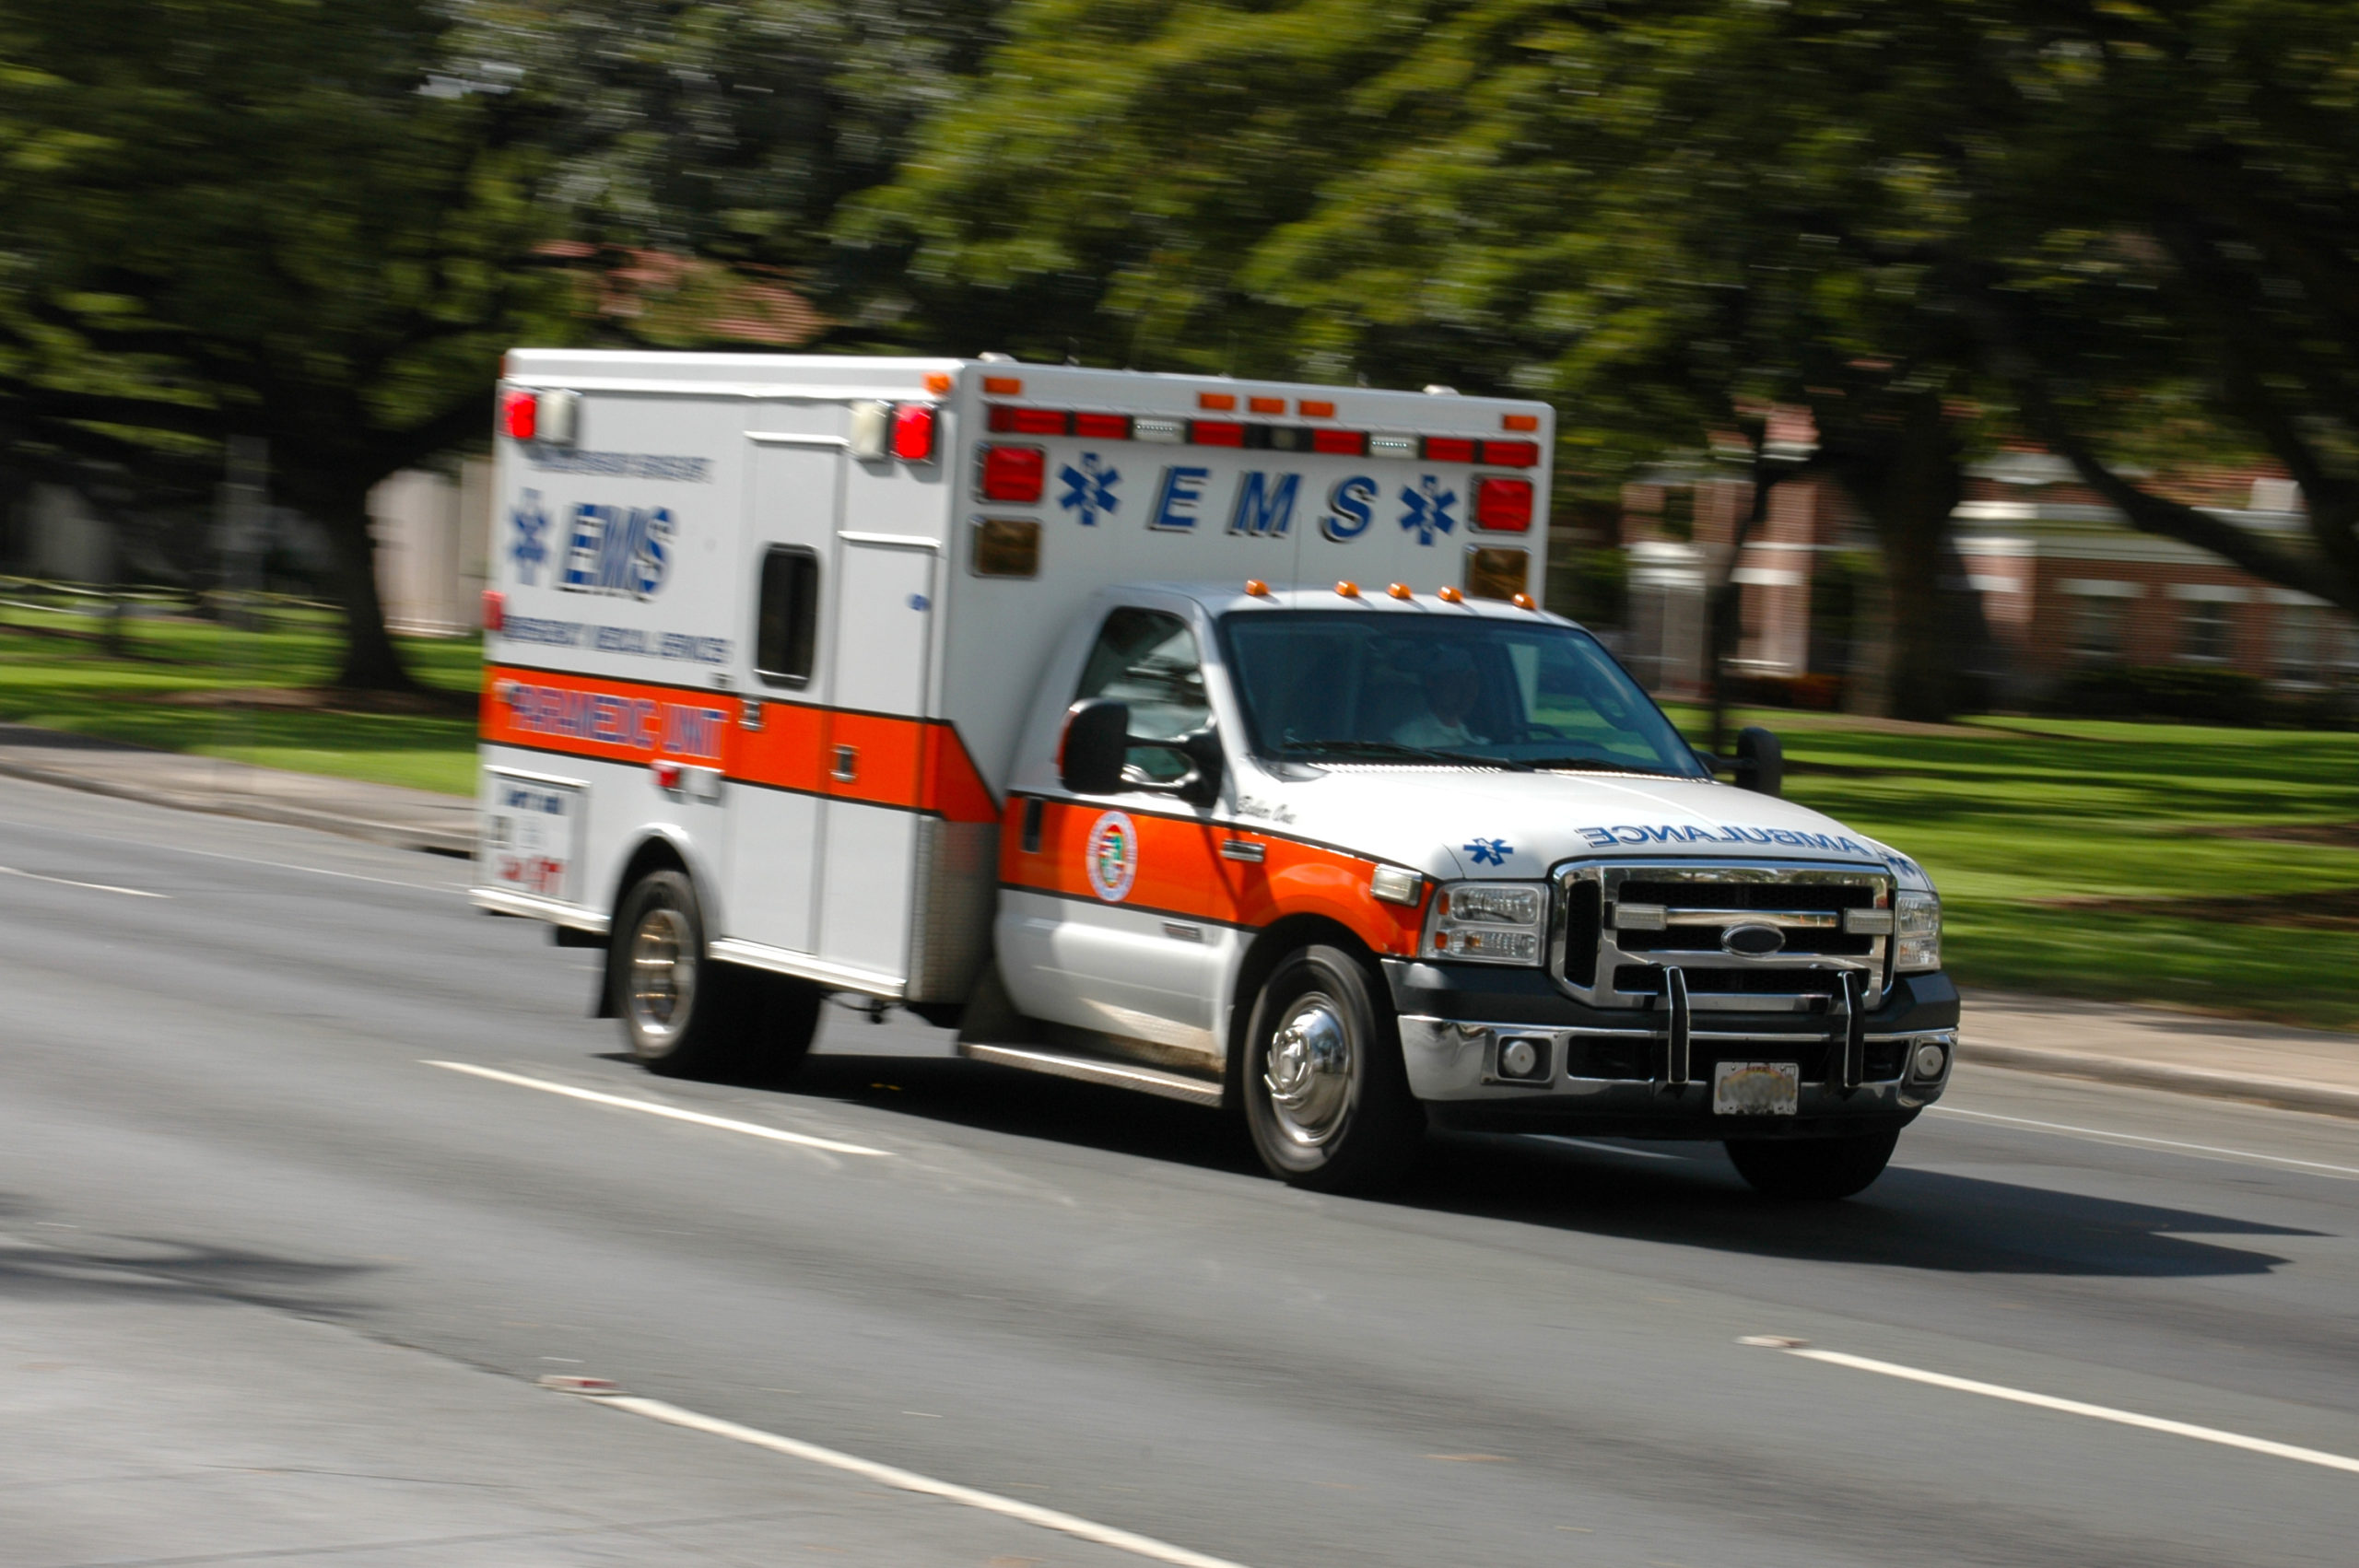 County set to buy emergency equipment